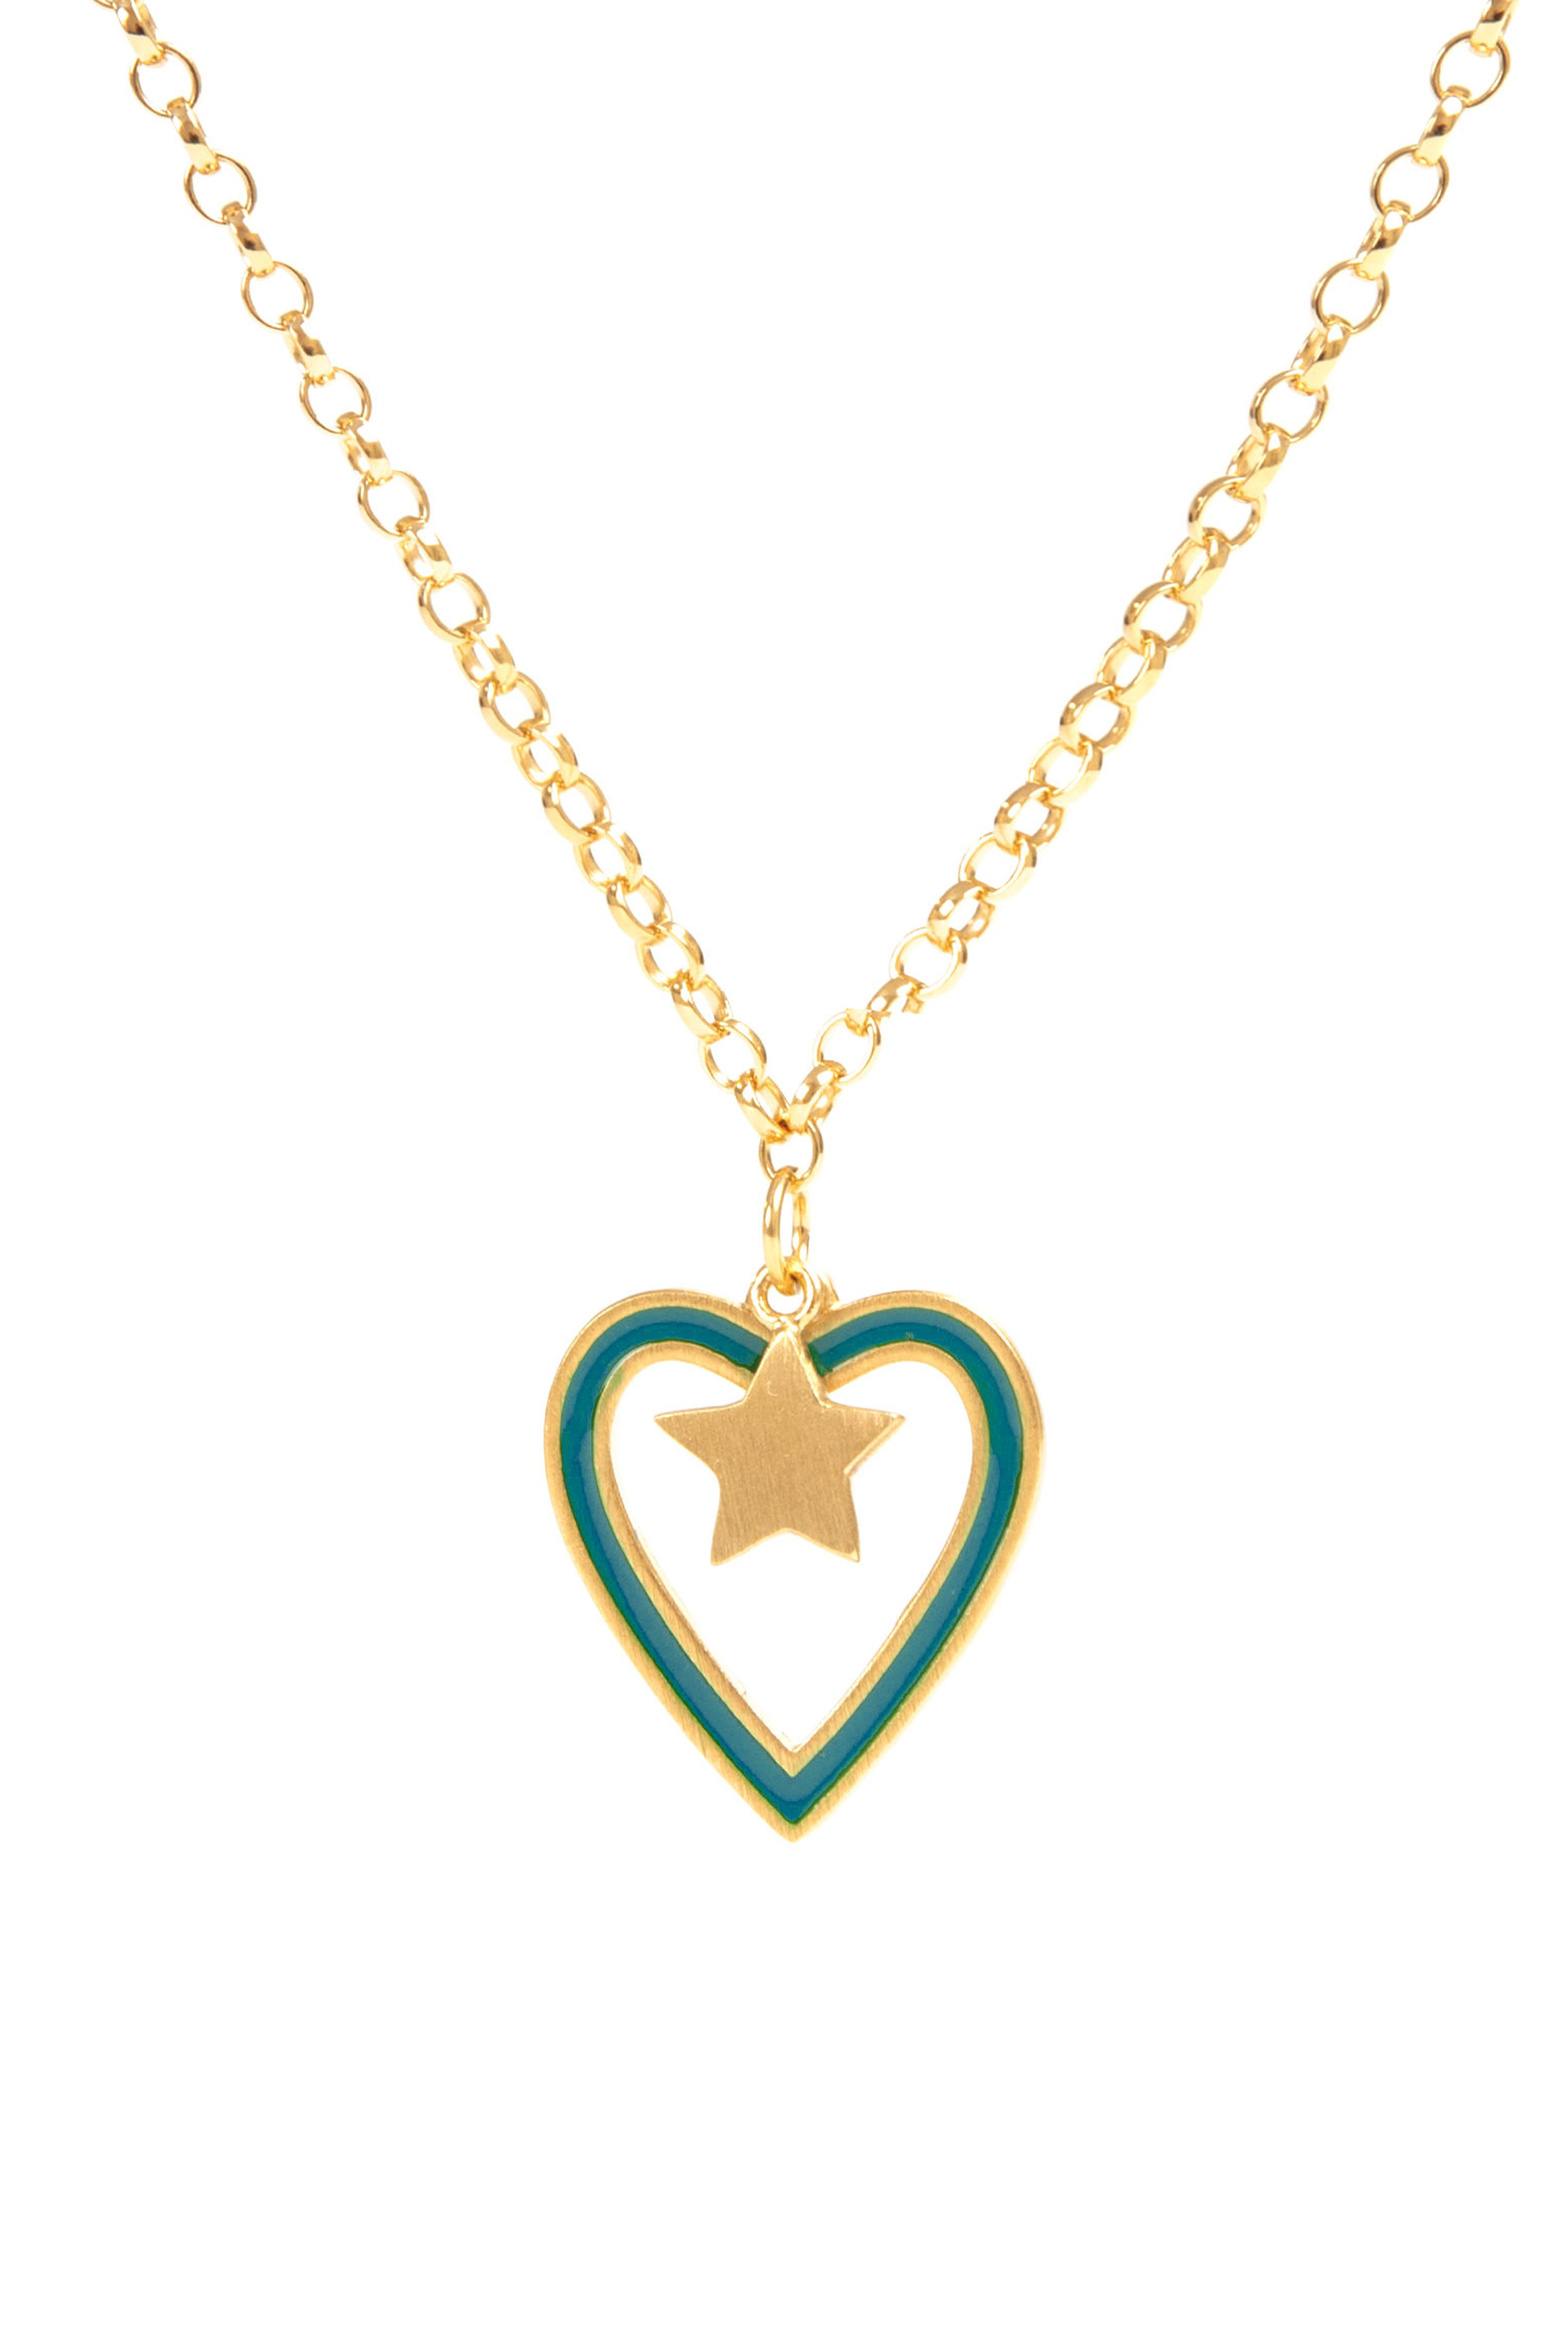 cb163_heart_necklace_kingfisher_heart_gold_chain_resized.jpg